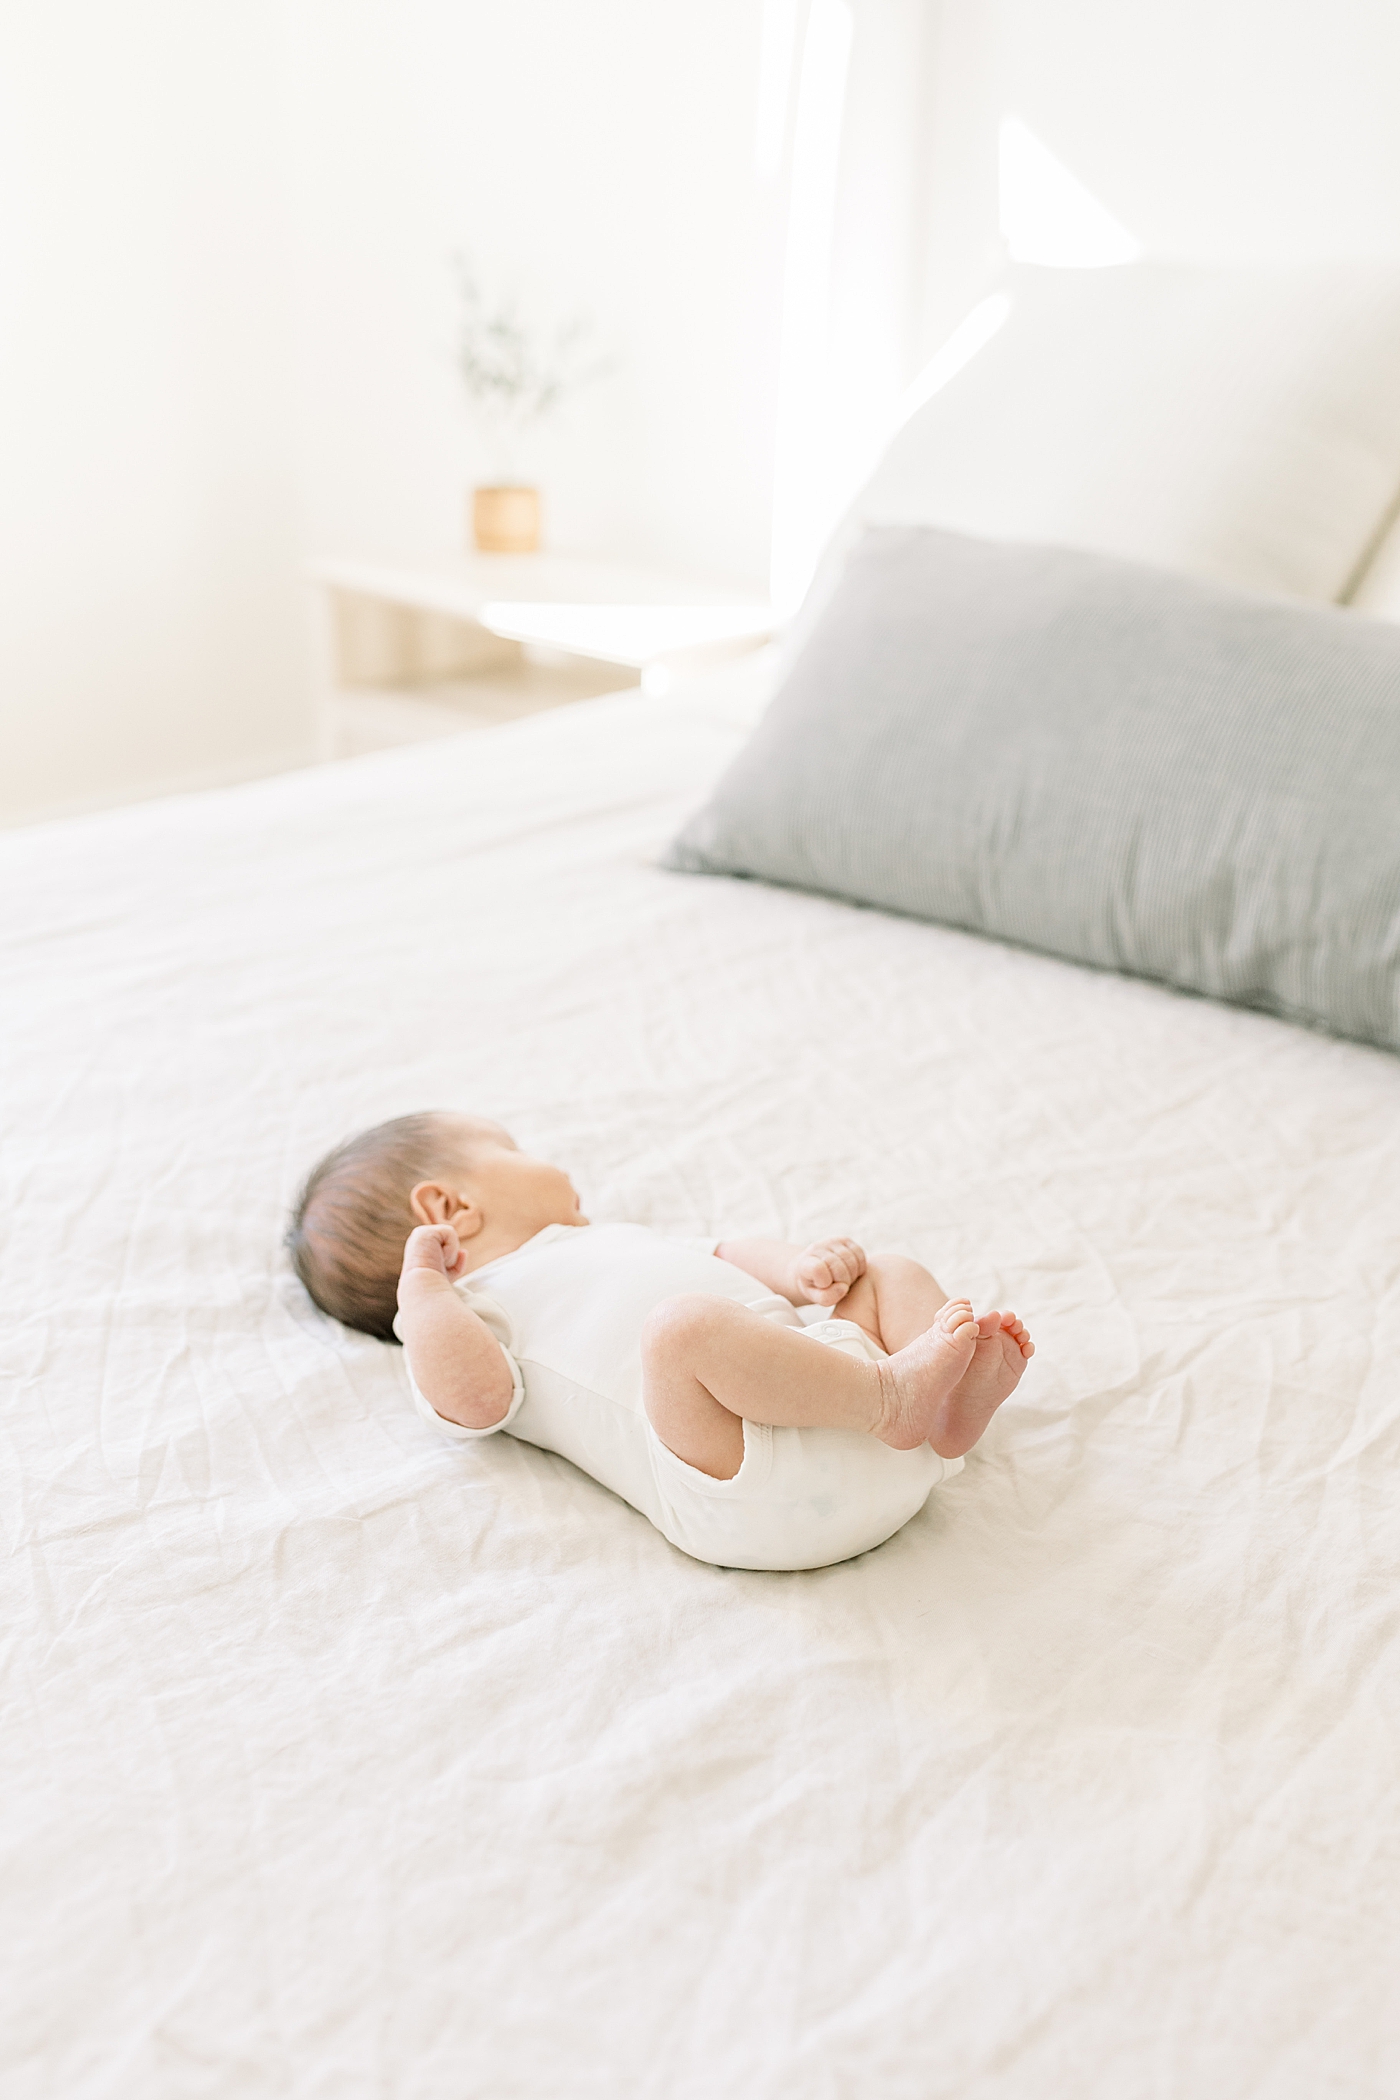 Newborn baby girl in a white onesie | Image by Caitlyn Motycka